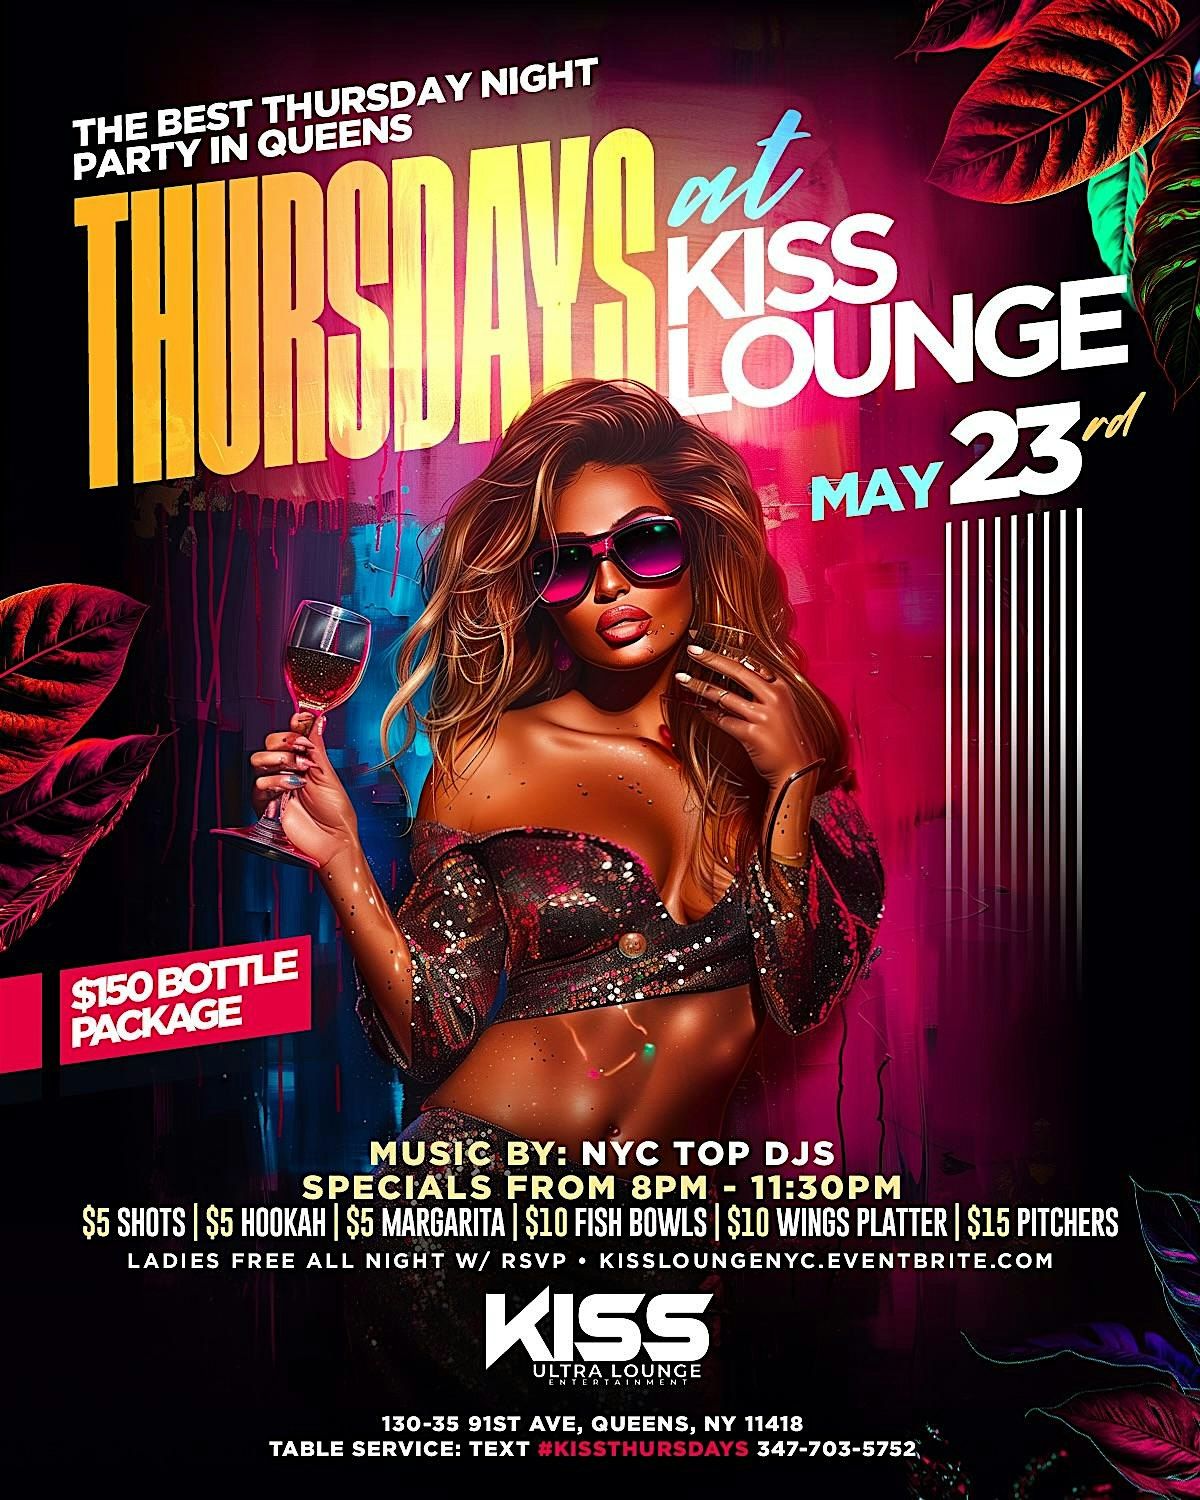 Thursdays at Kiss lounge